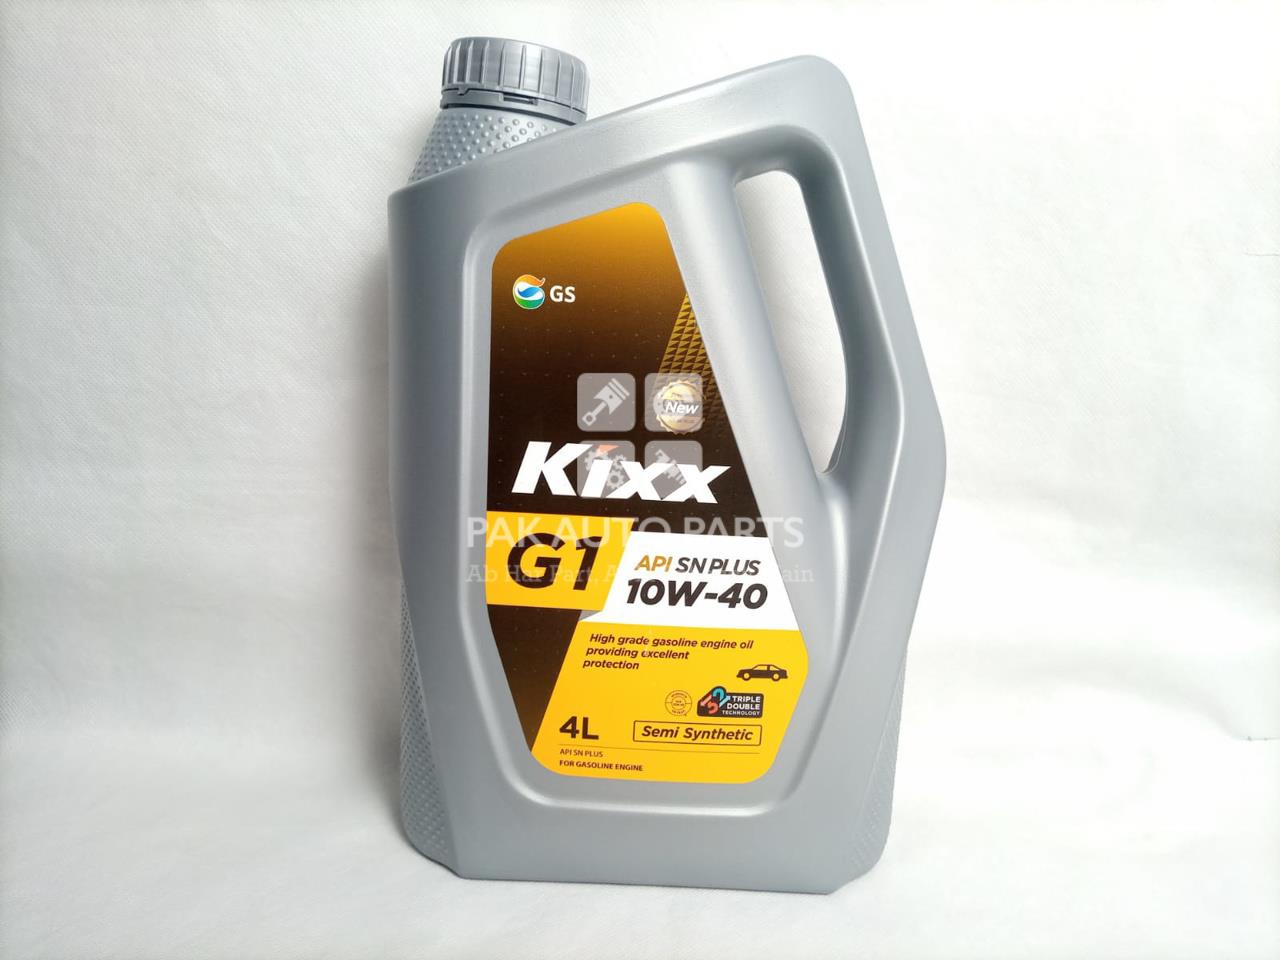 KIXX G1 SN Plus API 10W-40 (4L) is a high performance gasoline engine .